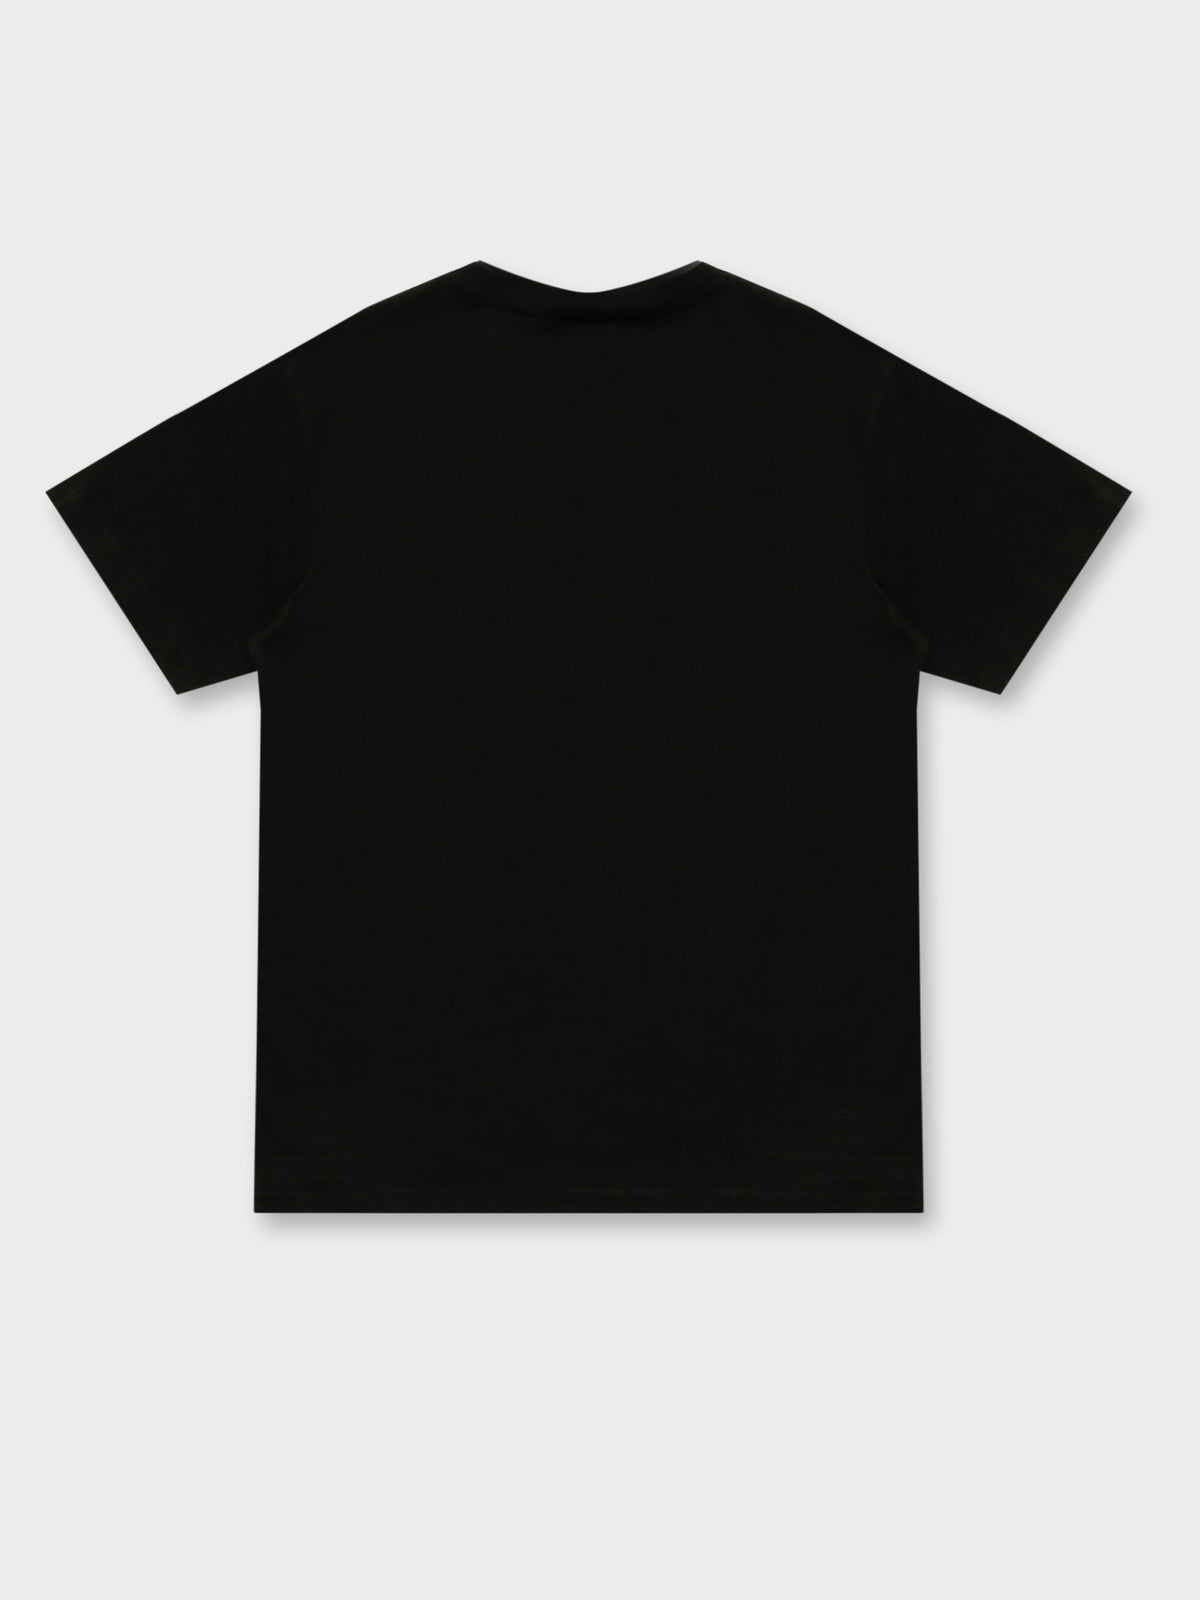 The Original Organic Cotton T-Shirt in Black